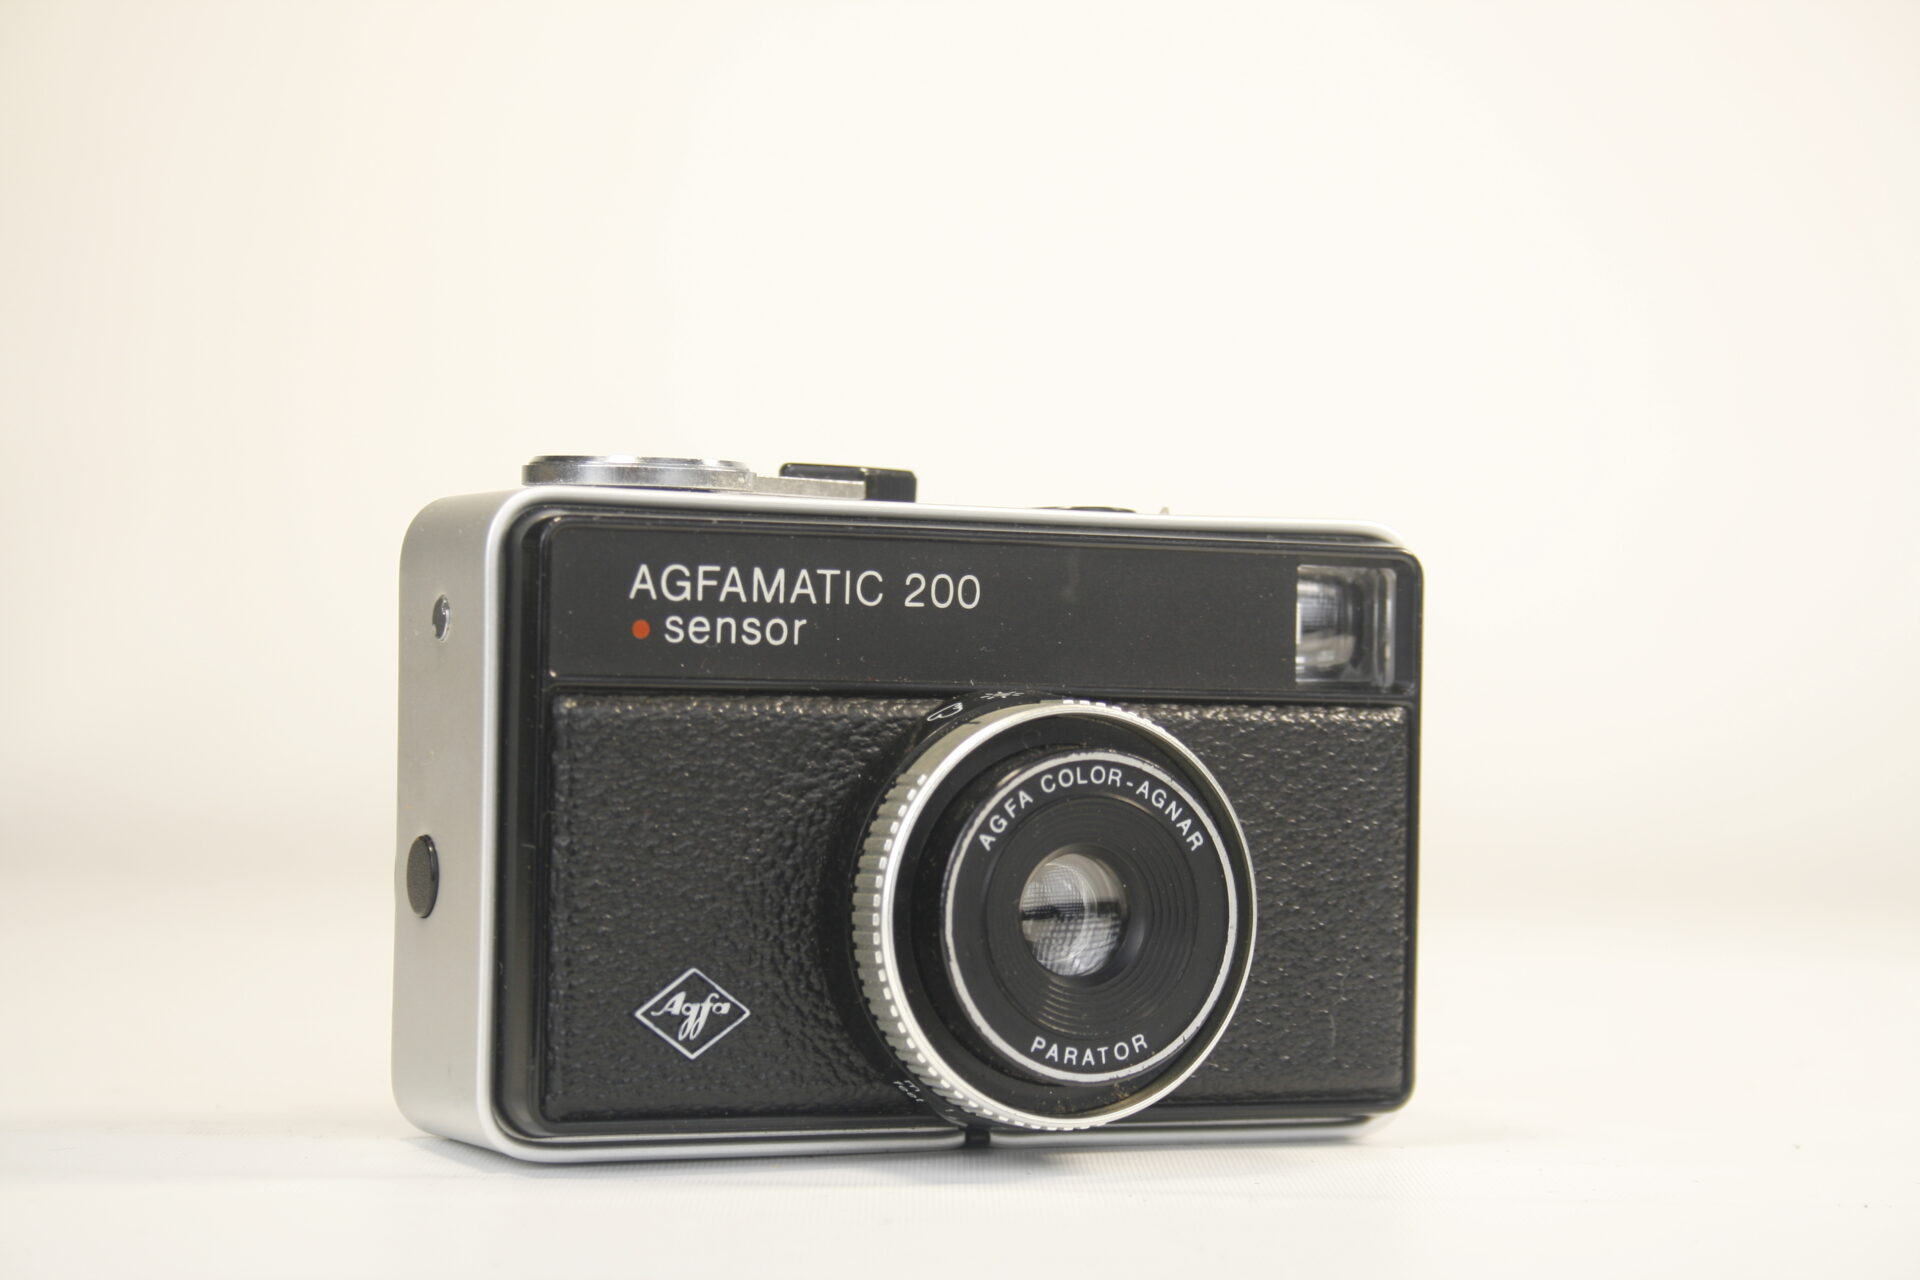 Agfa Agfamatic 200 Sensor. 126 cartridge film. 1972. Duitsland